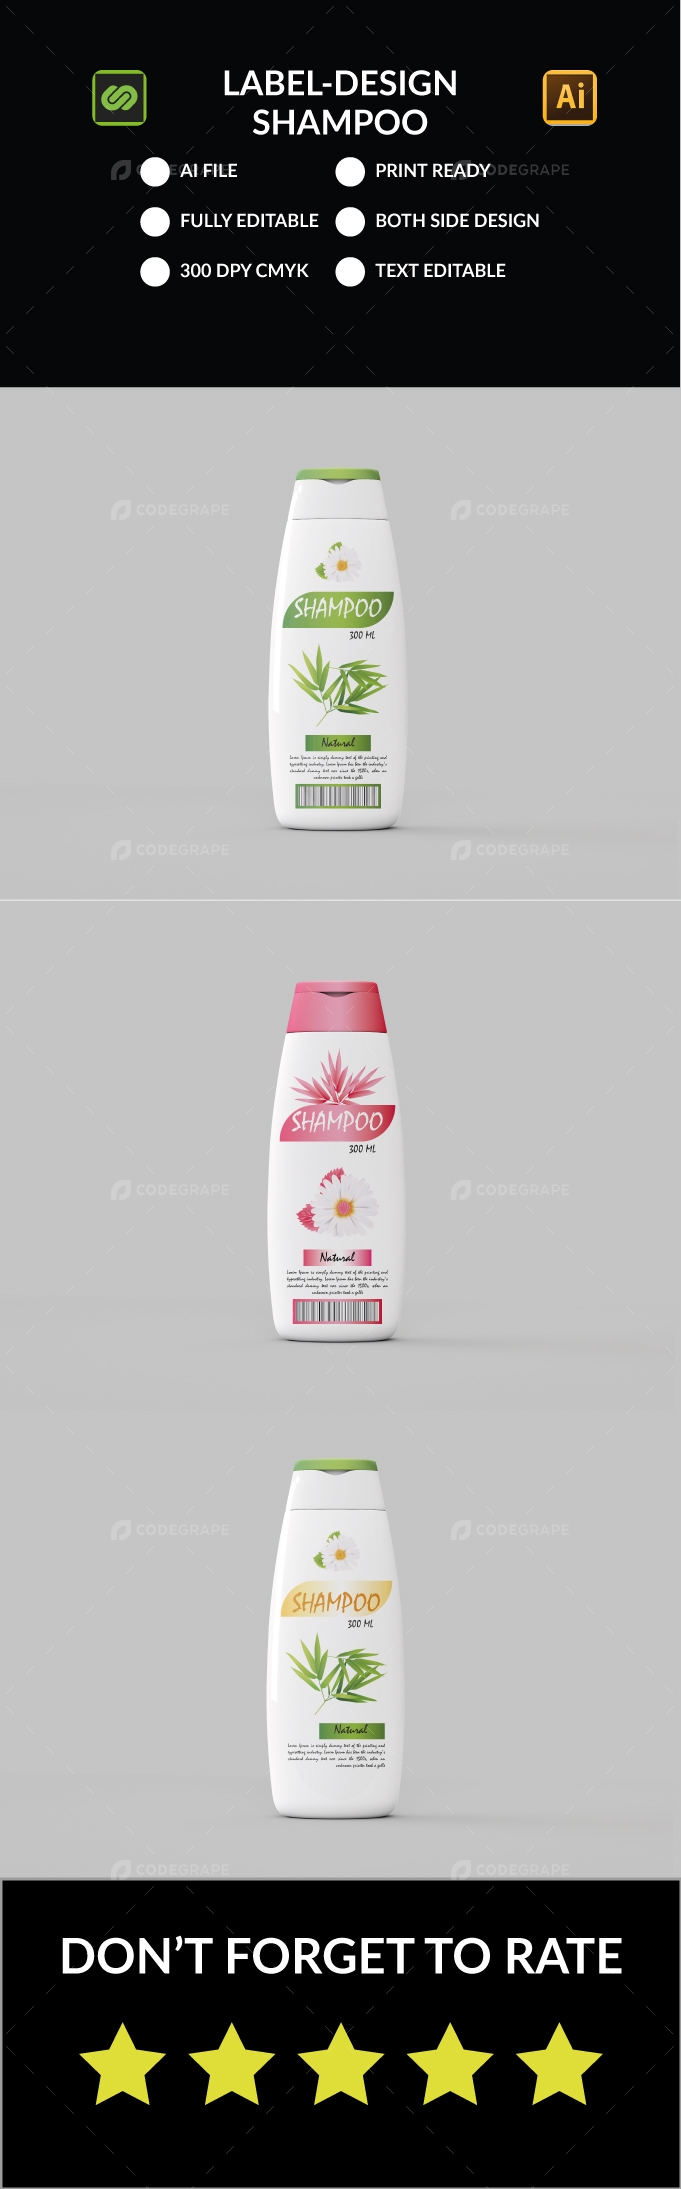 Shampoo Label Design